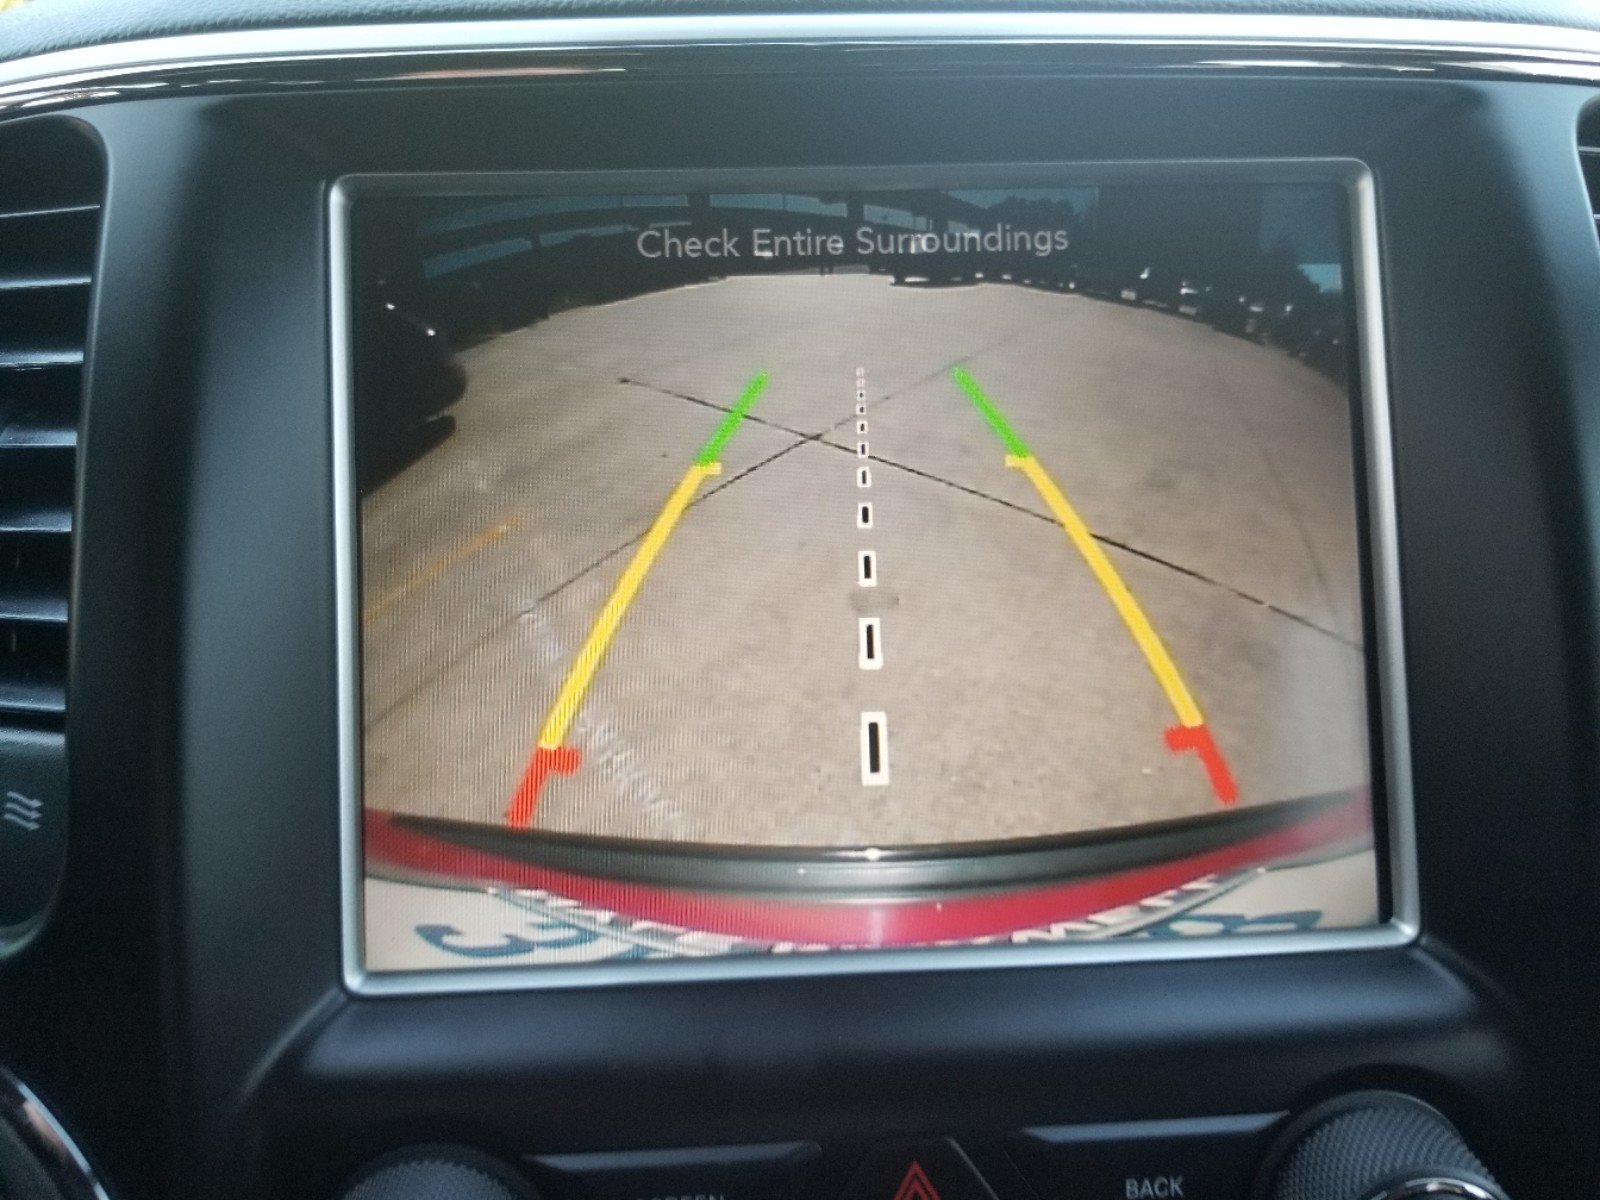 2014 jeep grand cherokee navigation display not correct